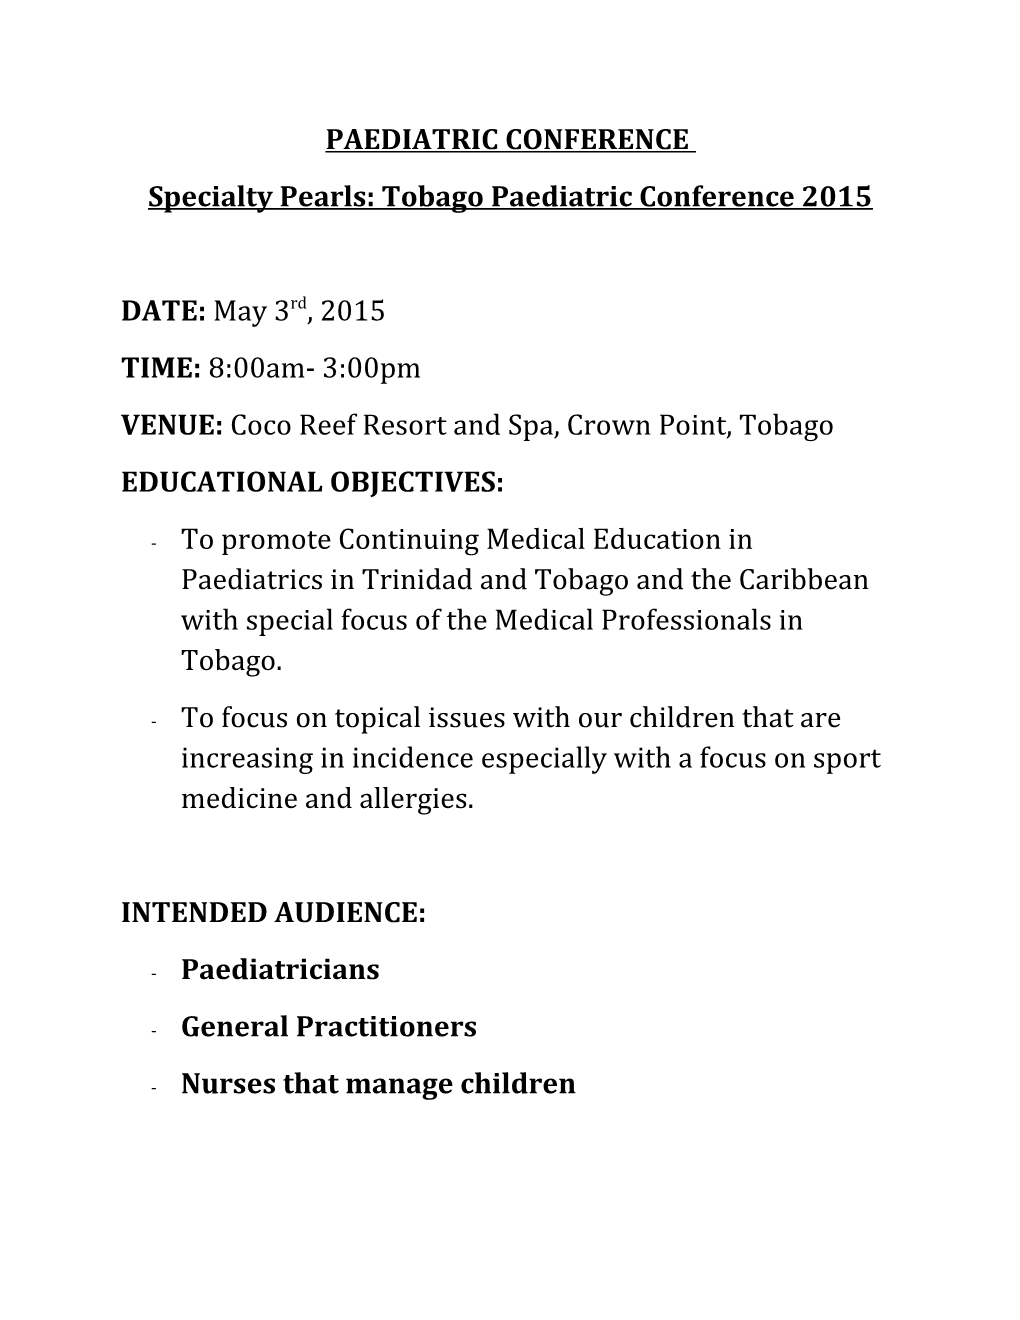 Specialty Pearls: Tobago Paediatric Conference 2015